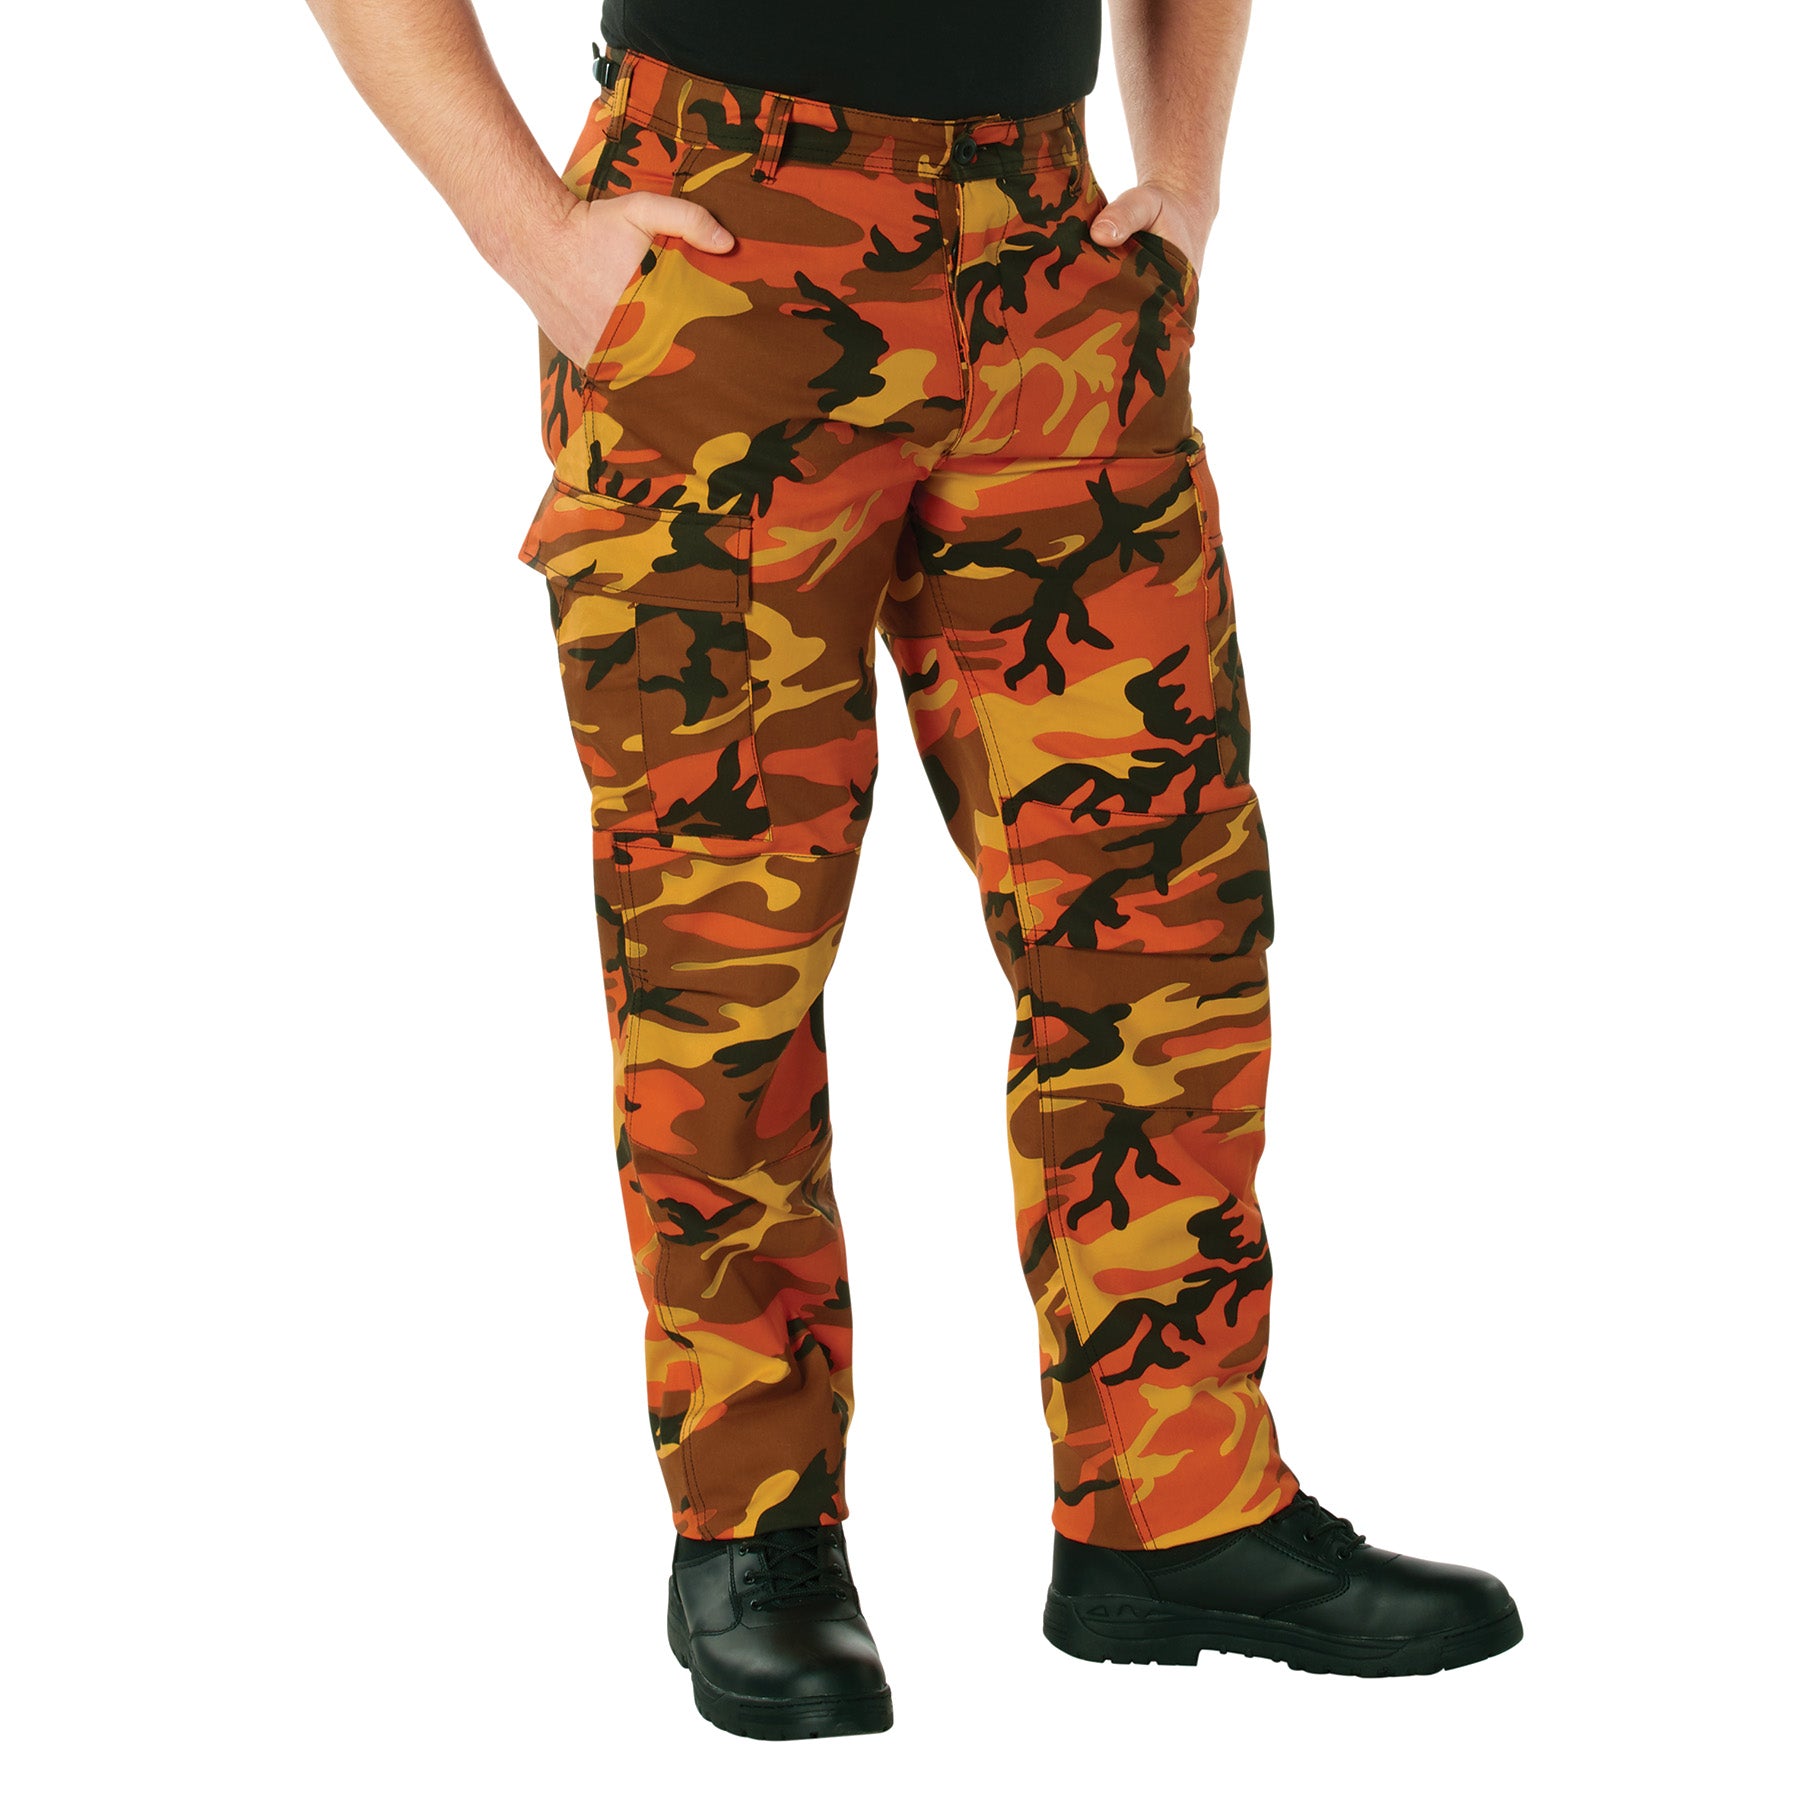 Fashion Nova  Pants  Jumpsuits  A Orange And Black Camouflage Pants Not  Brand New  Poshmark